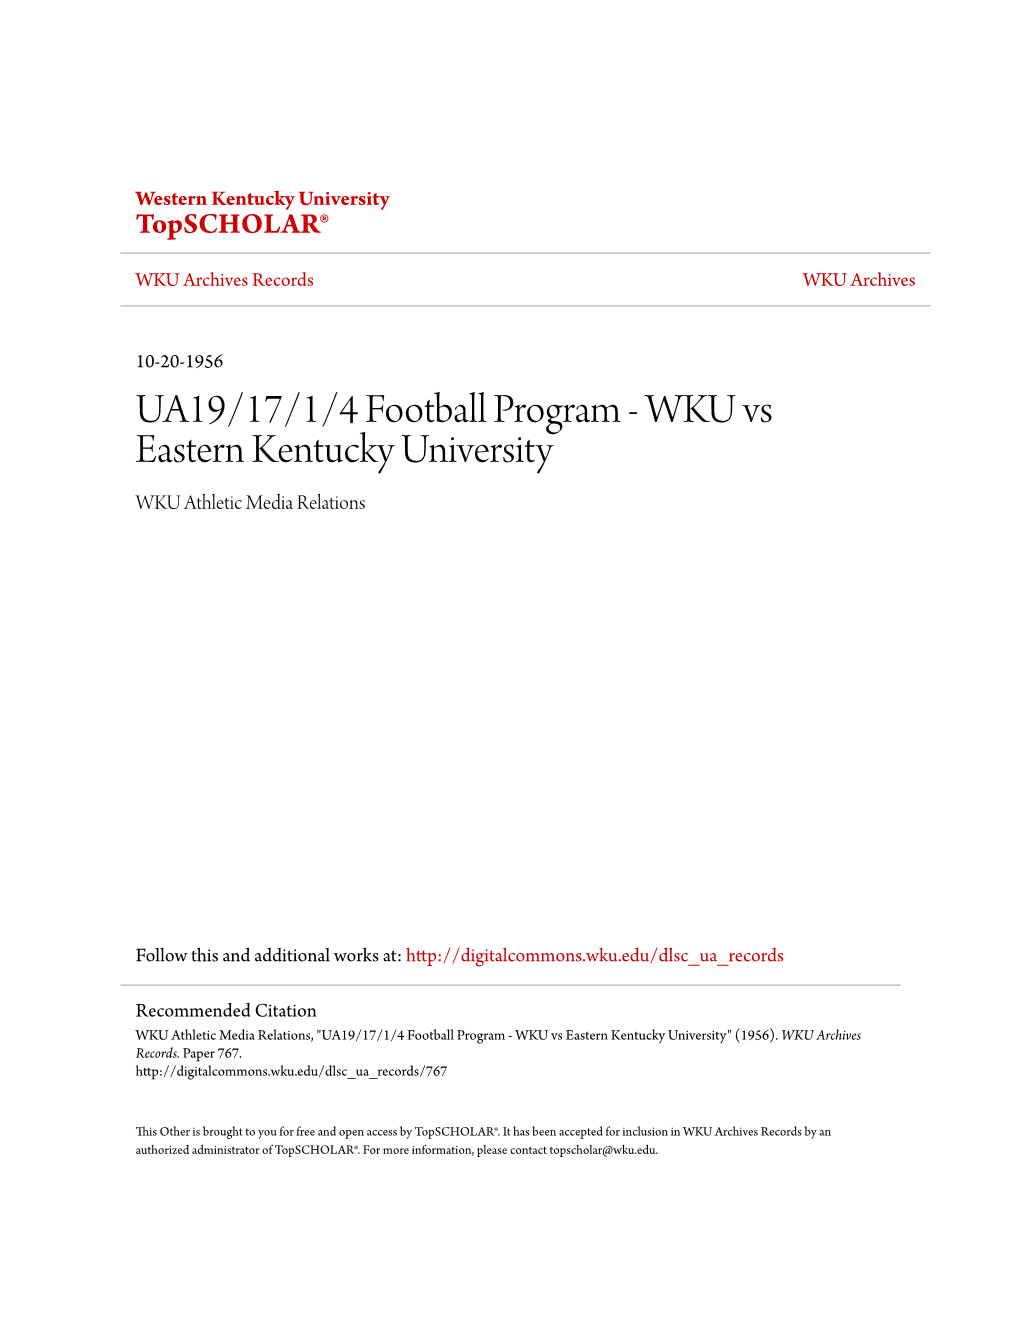 UA19/17/1/4 Football Program - WKU Vs Eastern Kentucky University WKU Athletic Media Relations